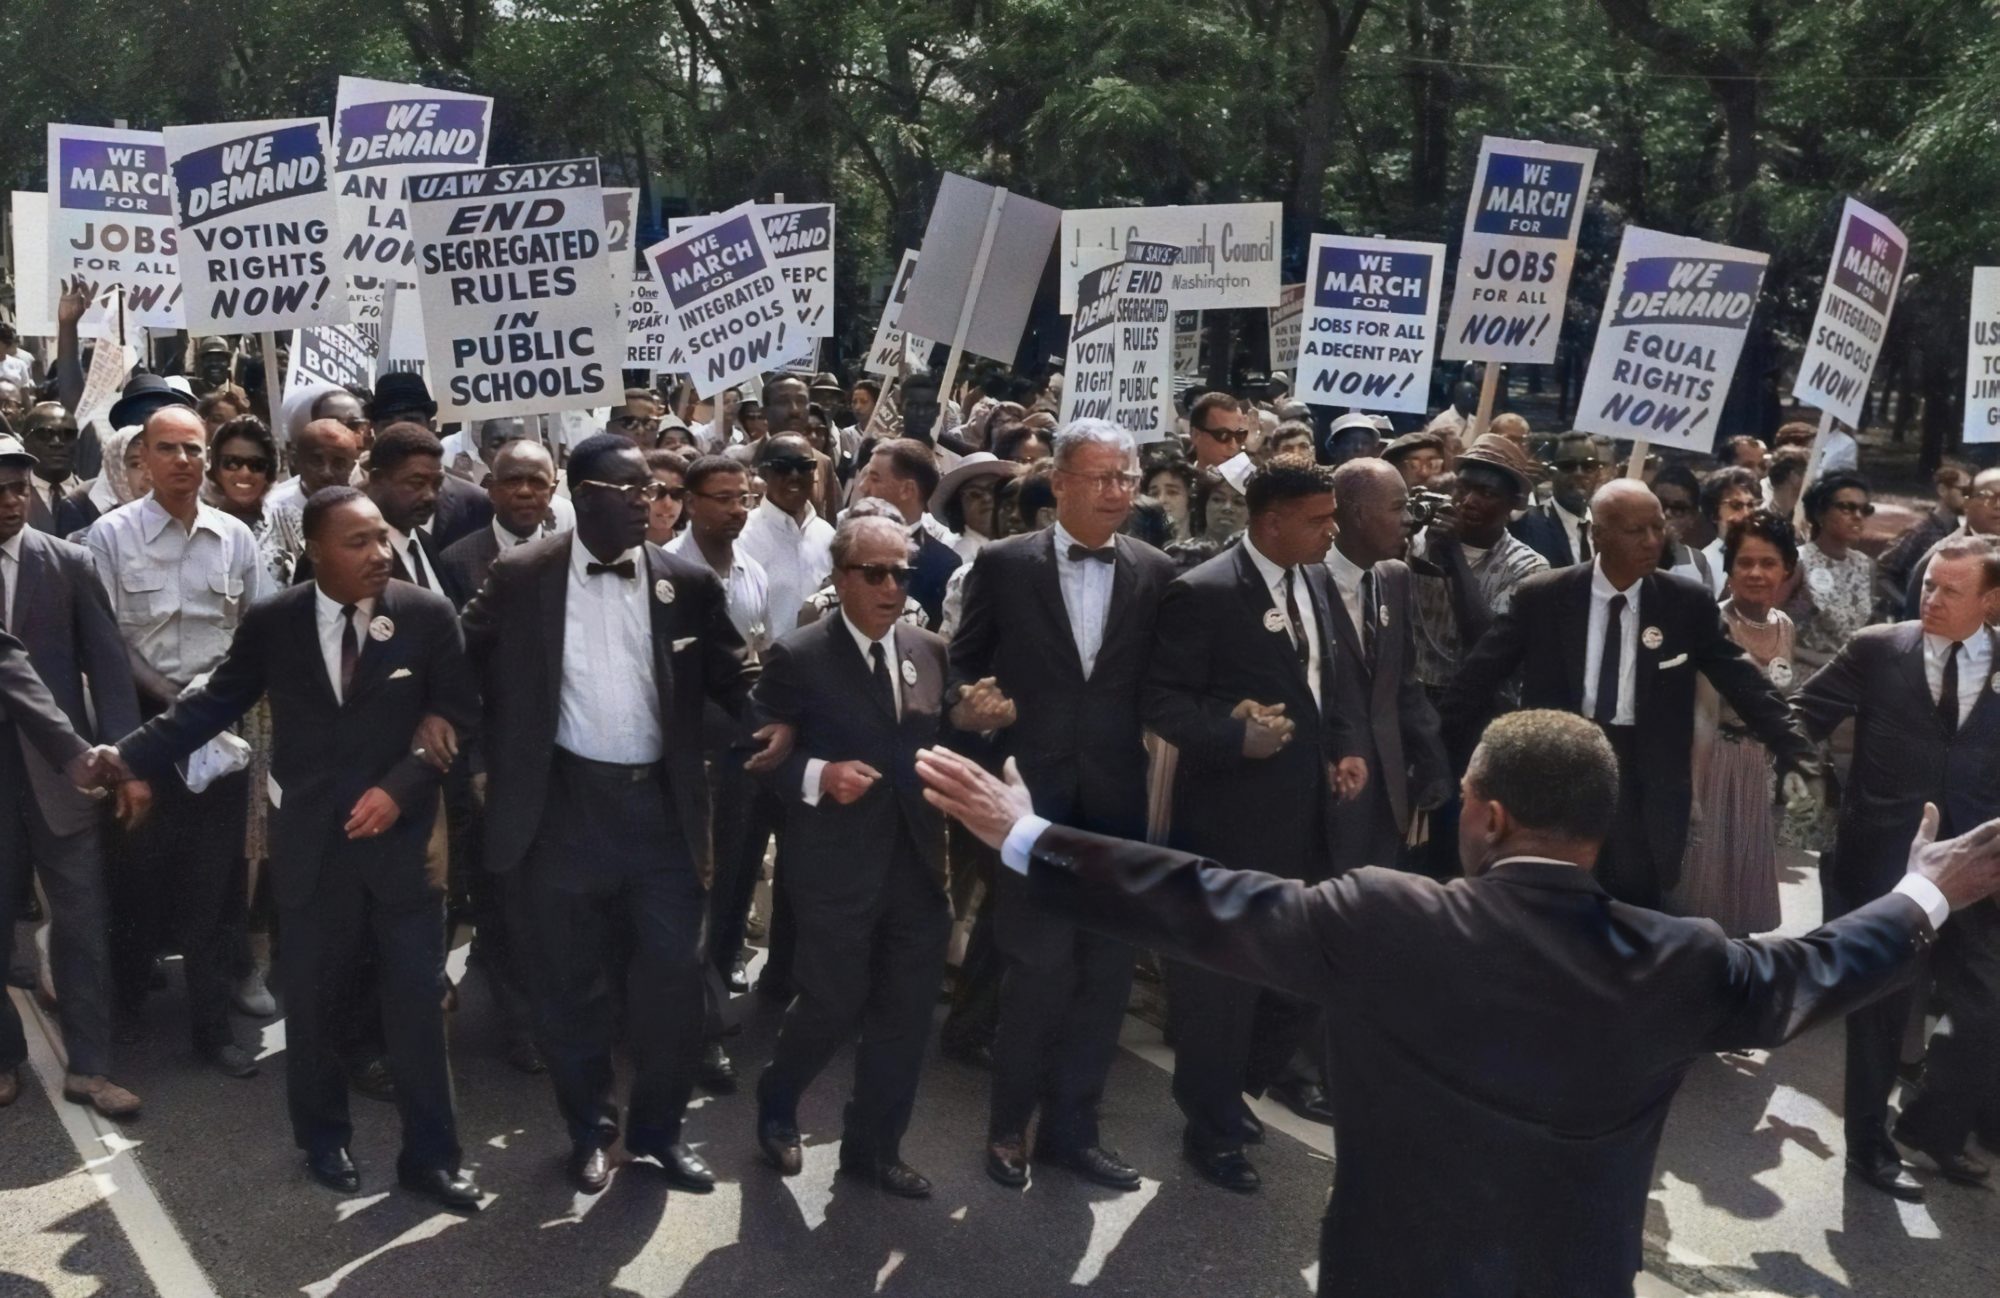 Transformational Activism Eternal Flame, Martin Luther King Jr. National Historic Site group protesting to end Segregation